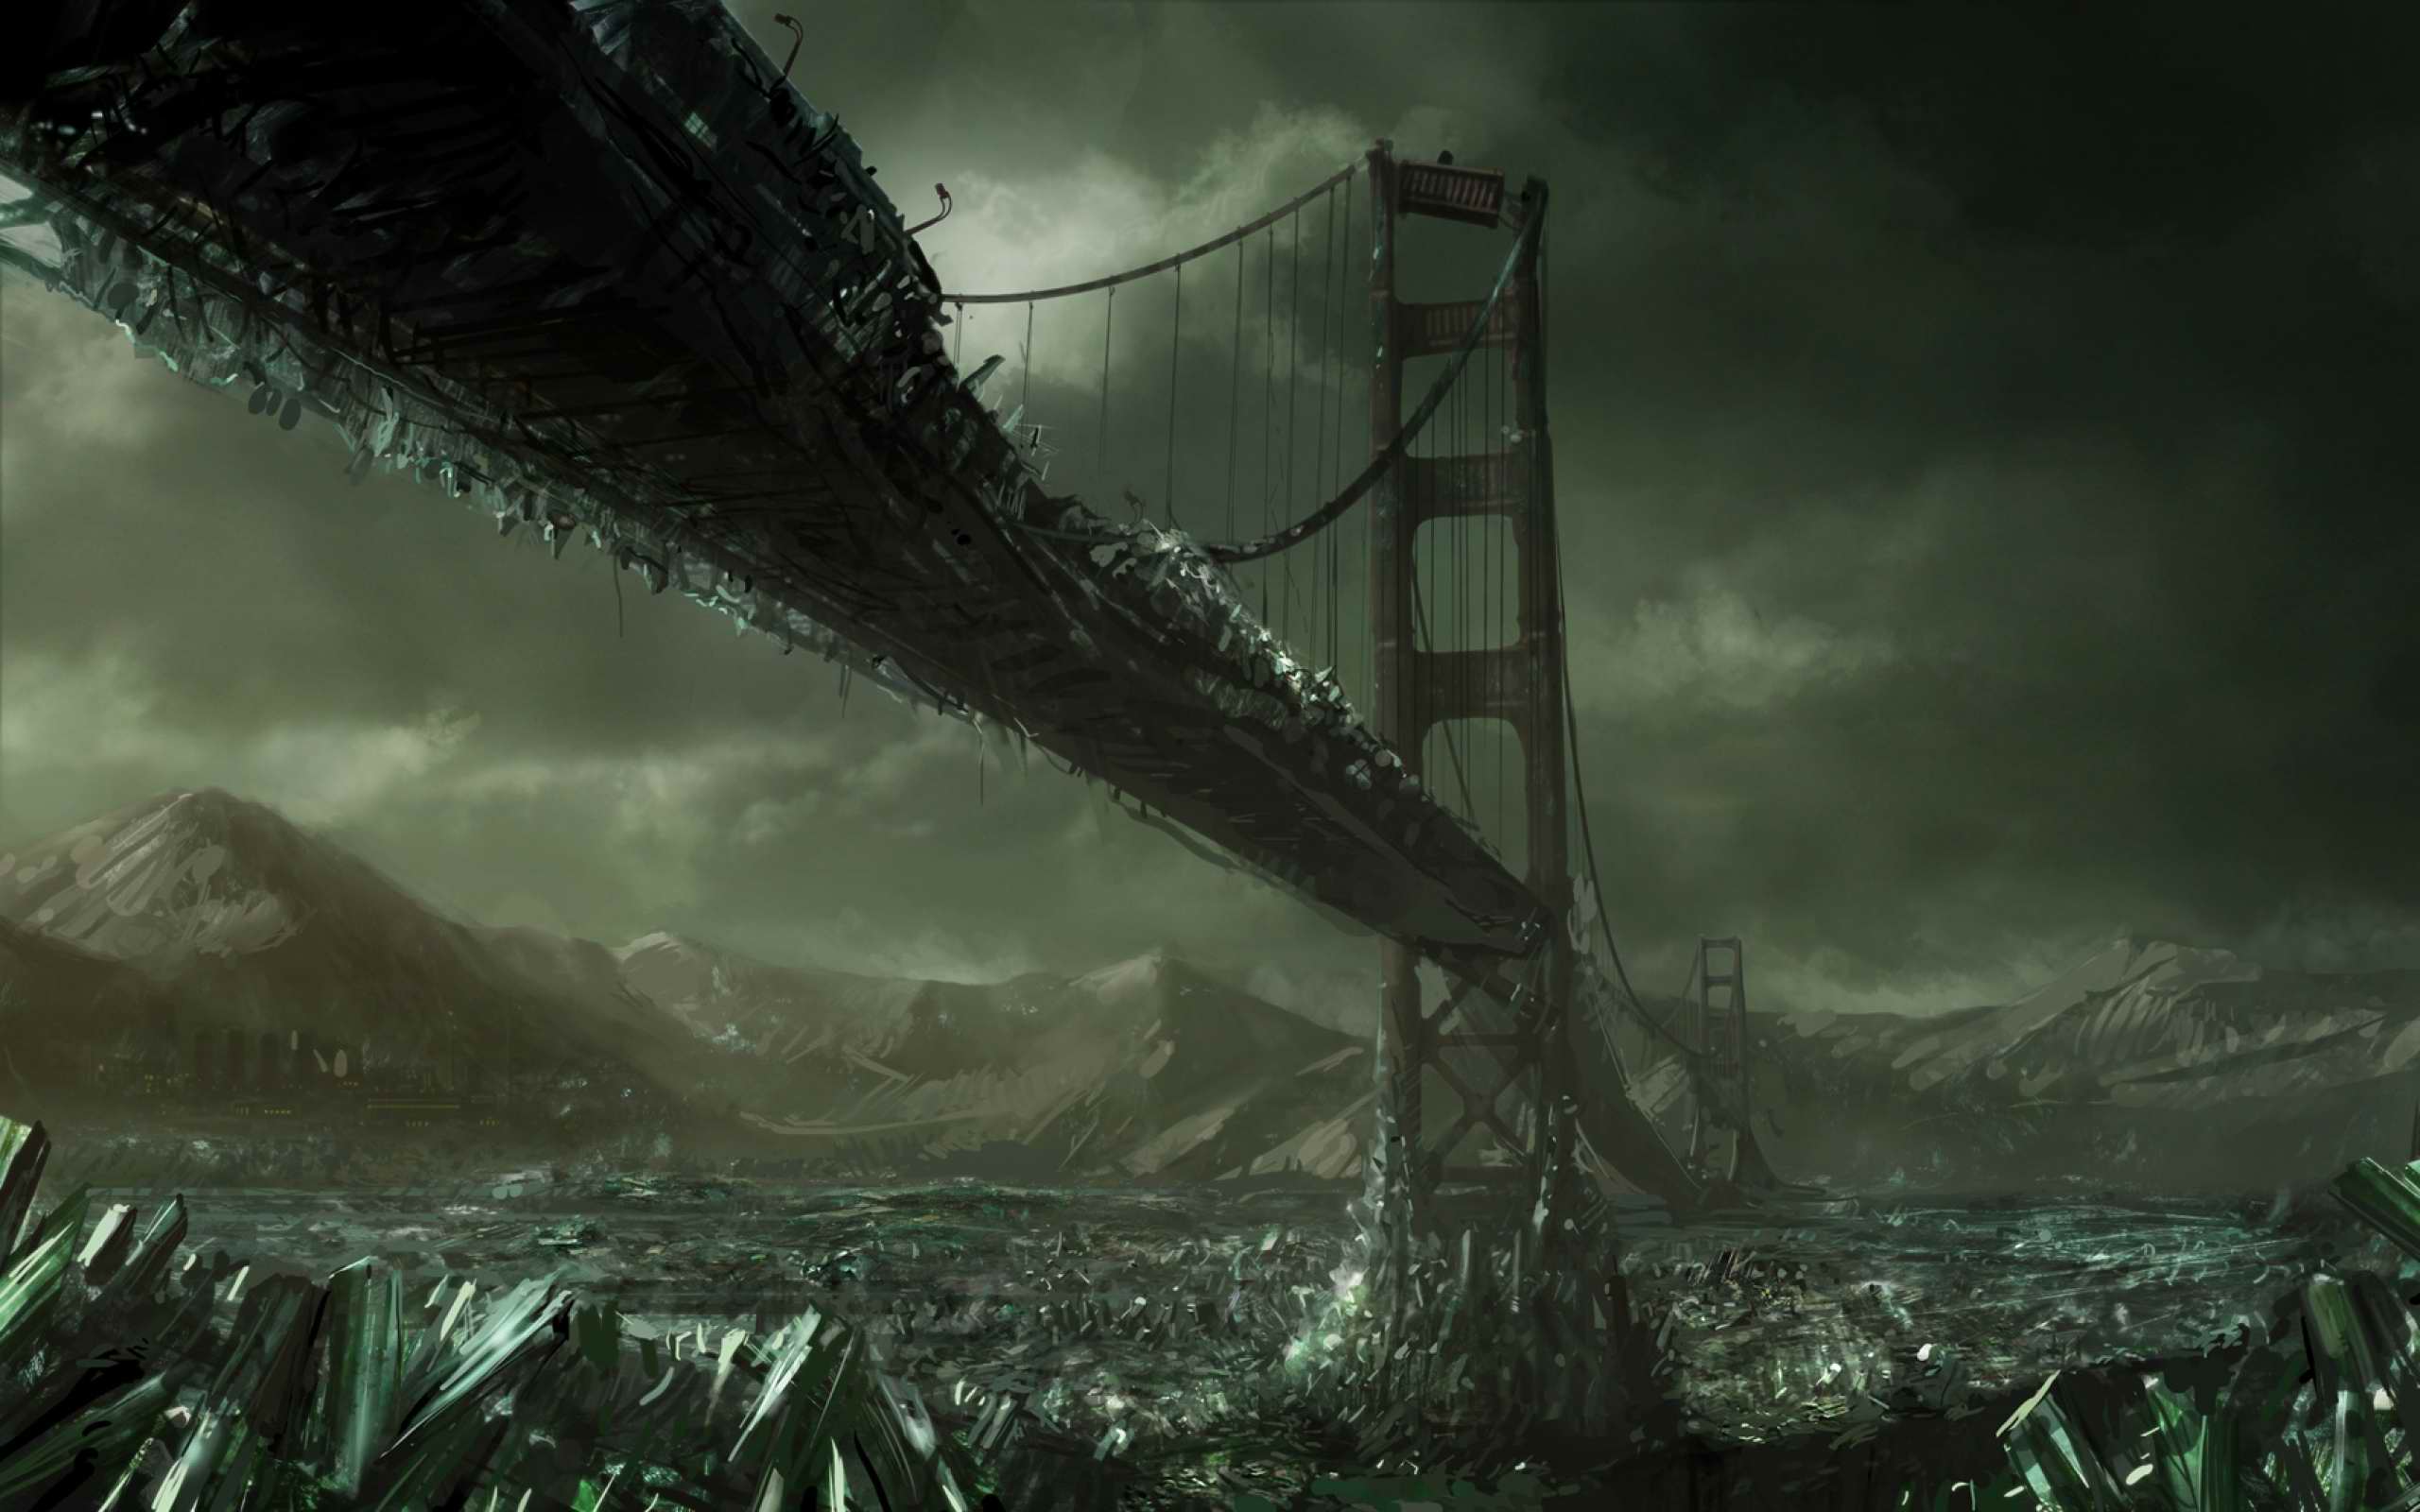 Ice Age, the Golden Gate Bridge